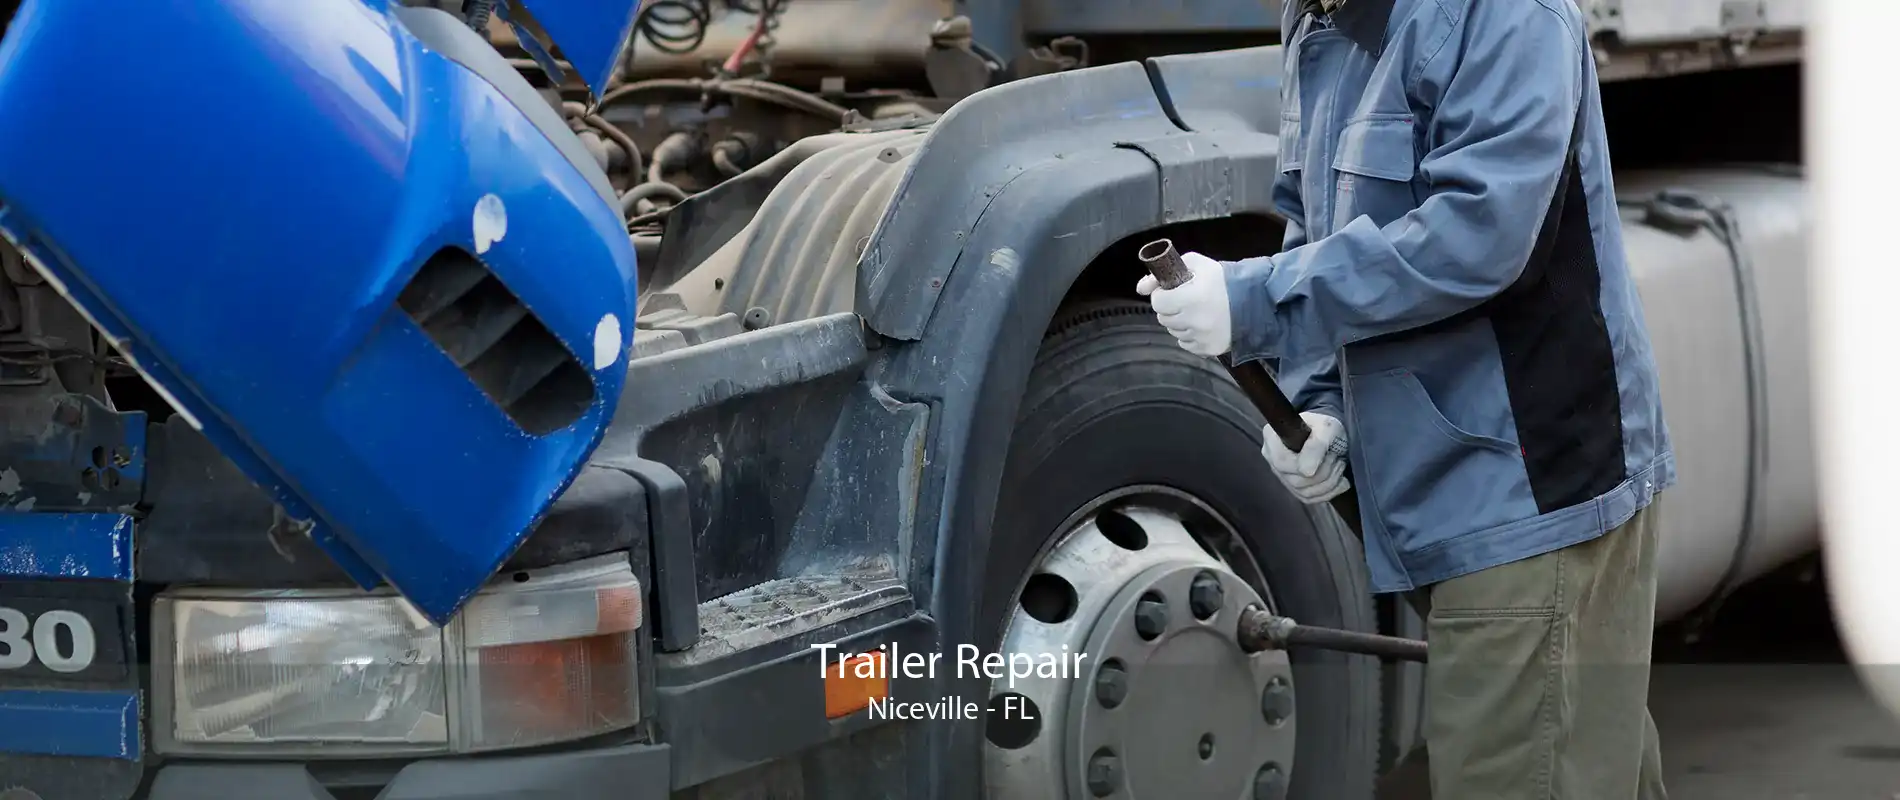 Trailer Repair Niceville - FL